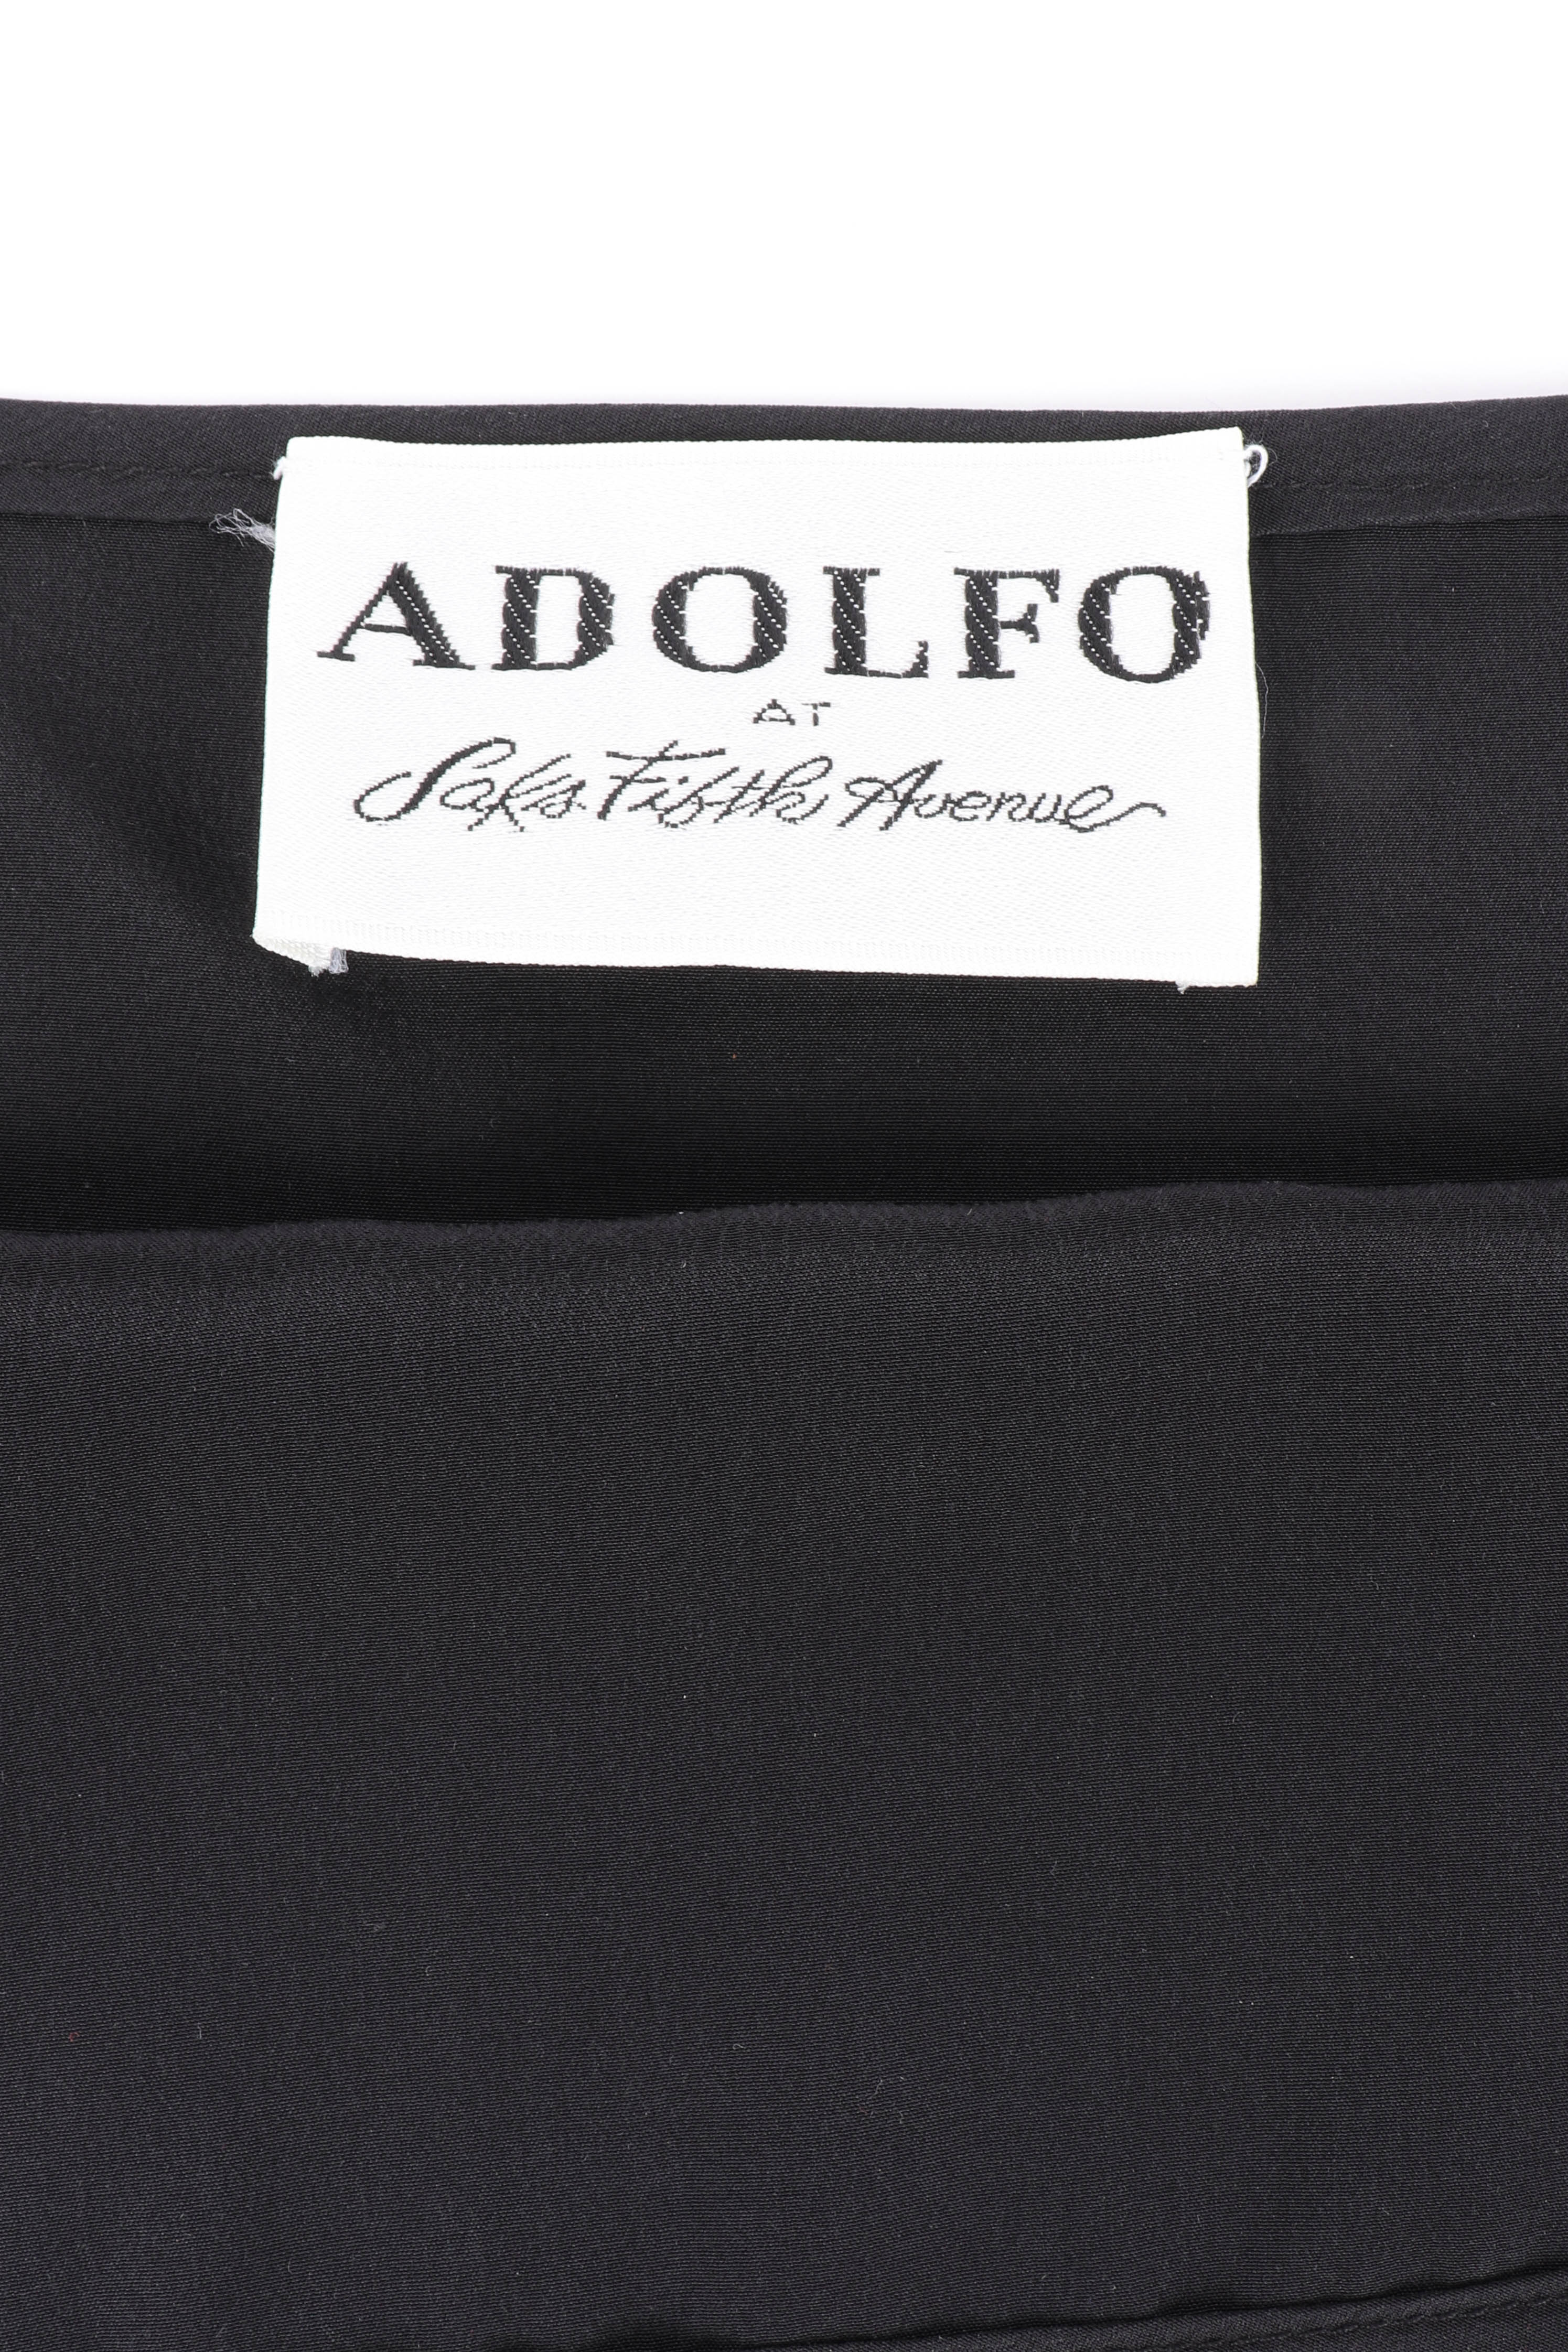 Vintage Adolfo Sequin Lace Dress slip signature label @recessla